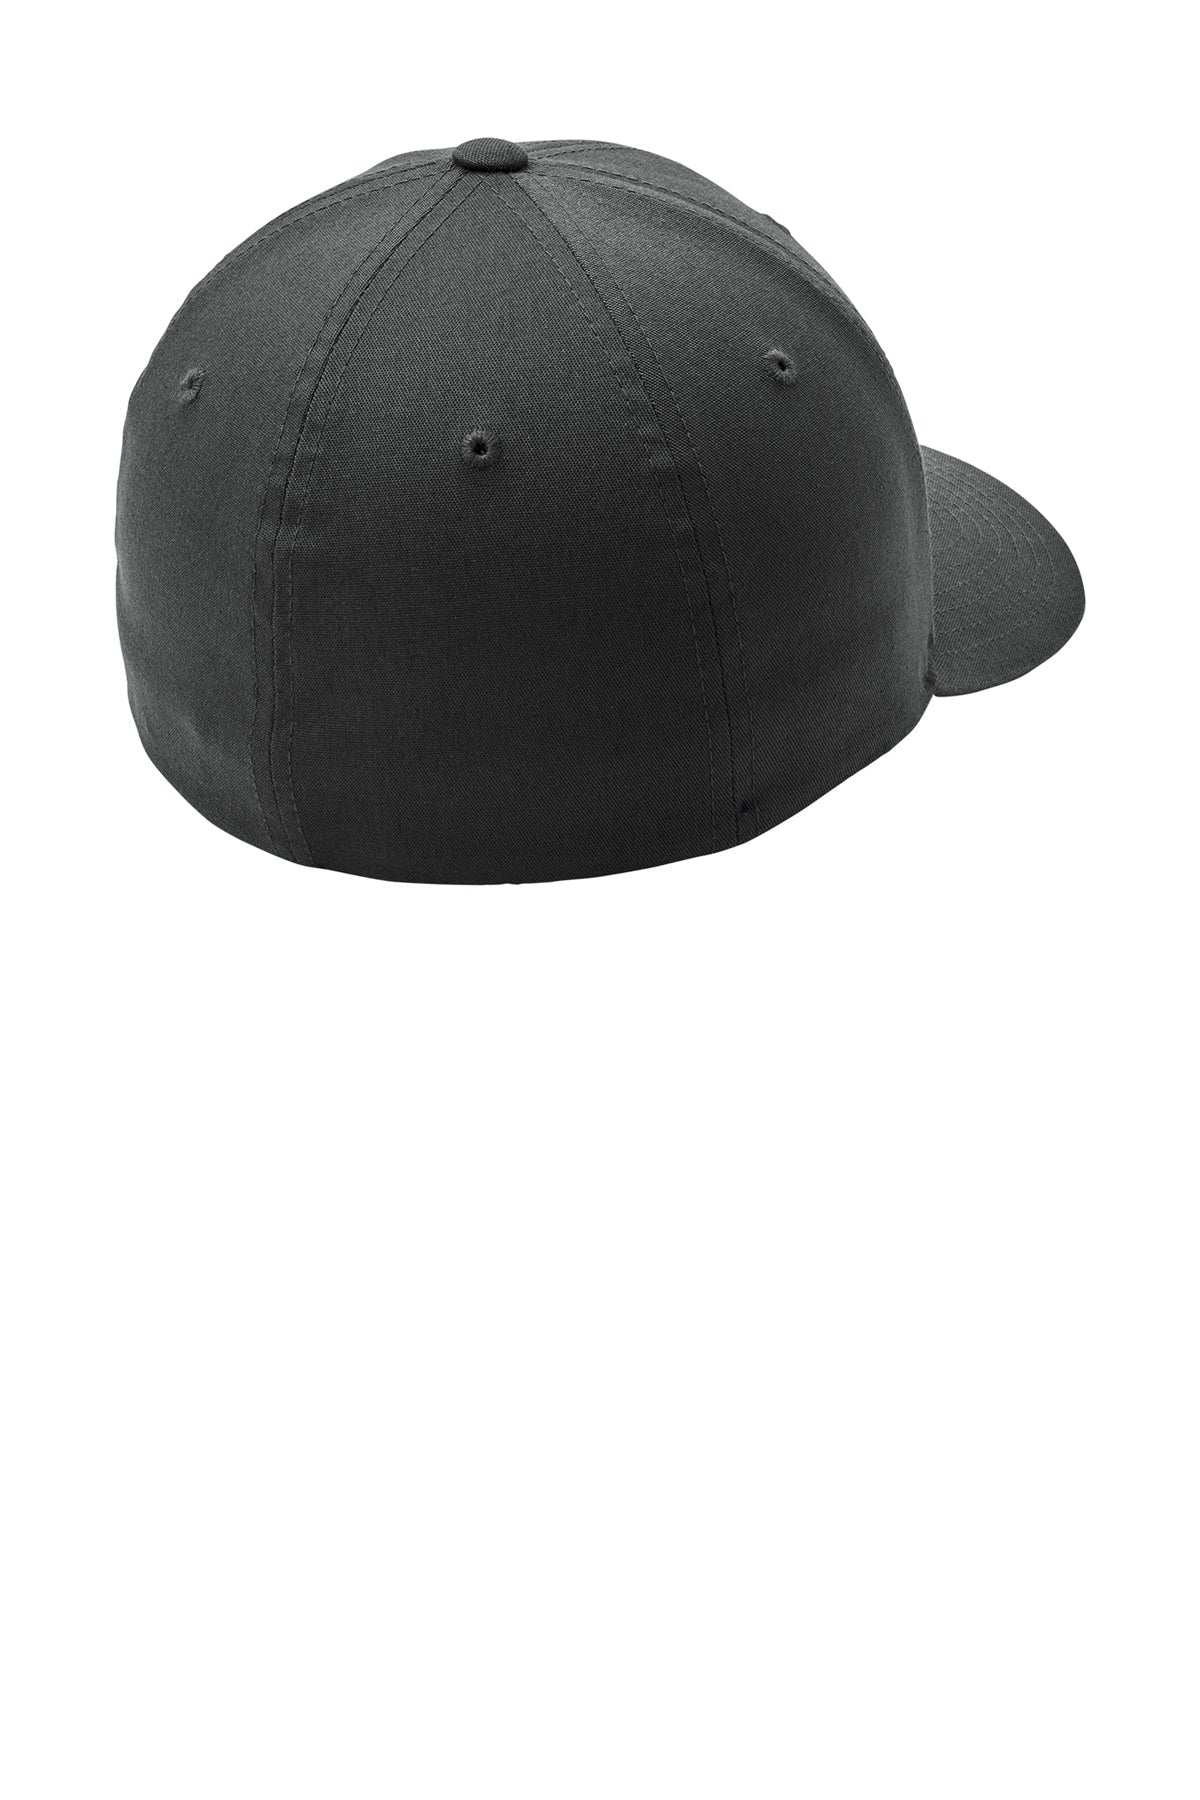 Port Authority Flexfit Cotton Twill Customized Caps, Black